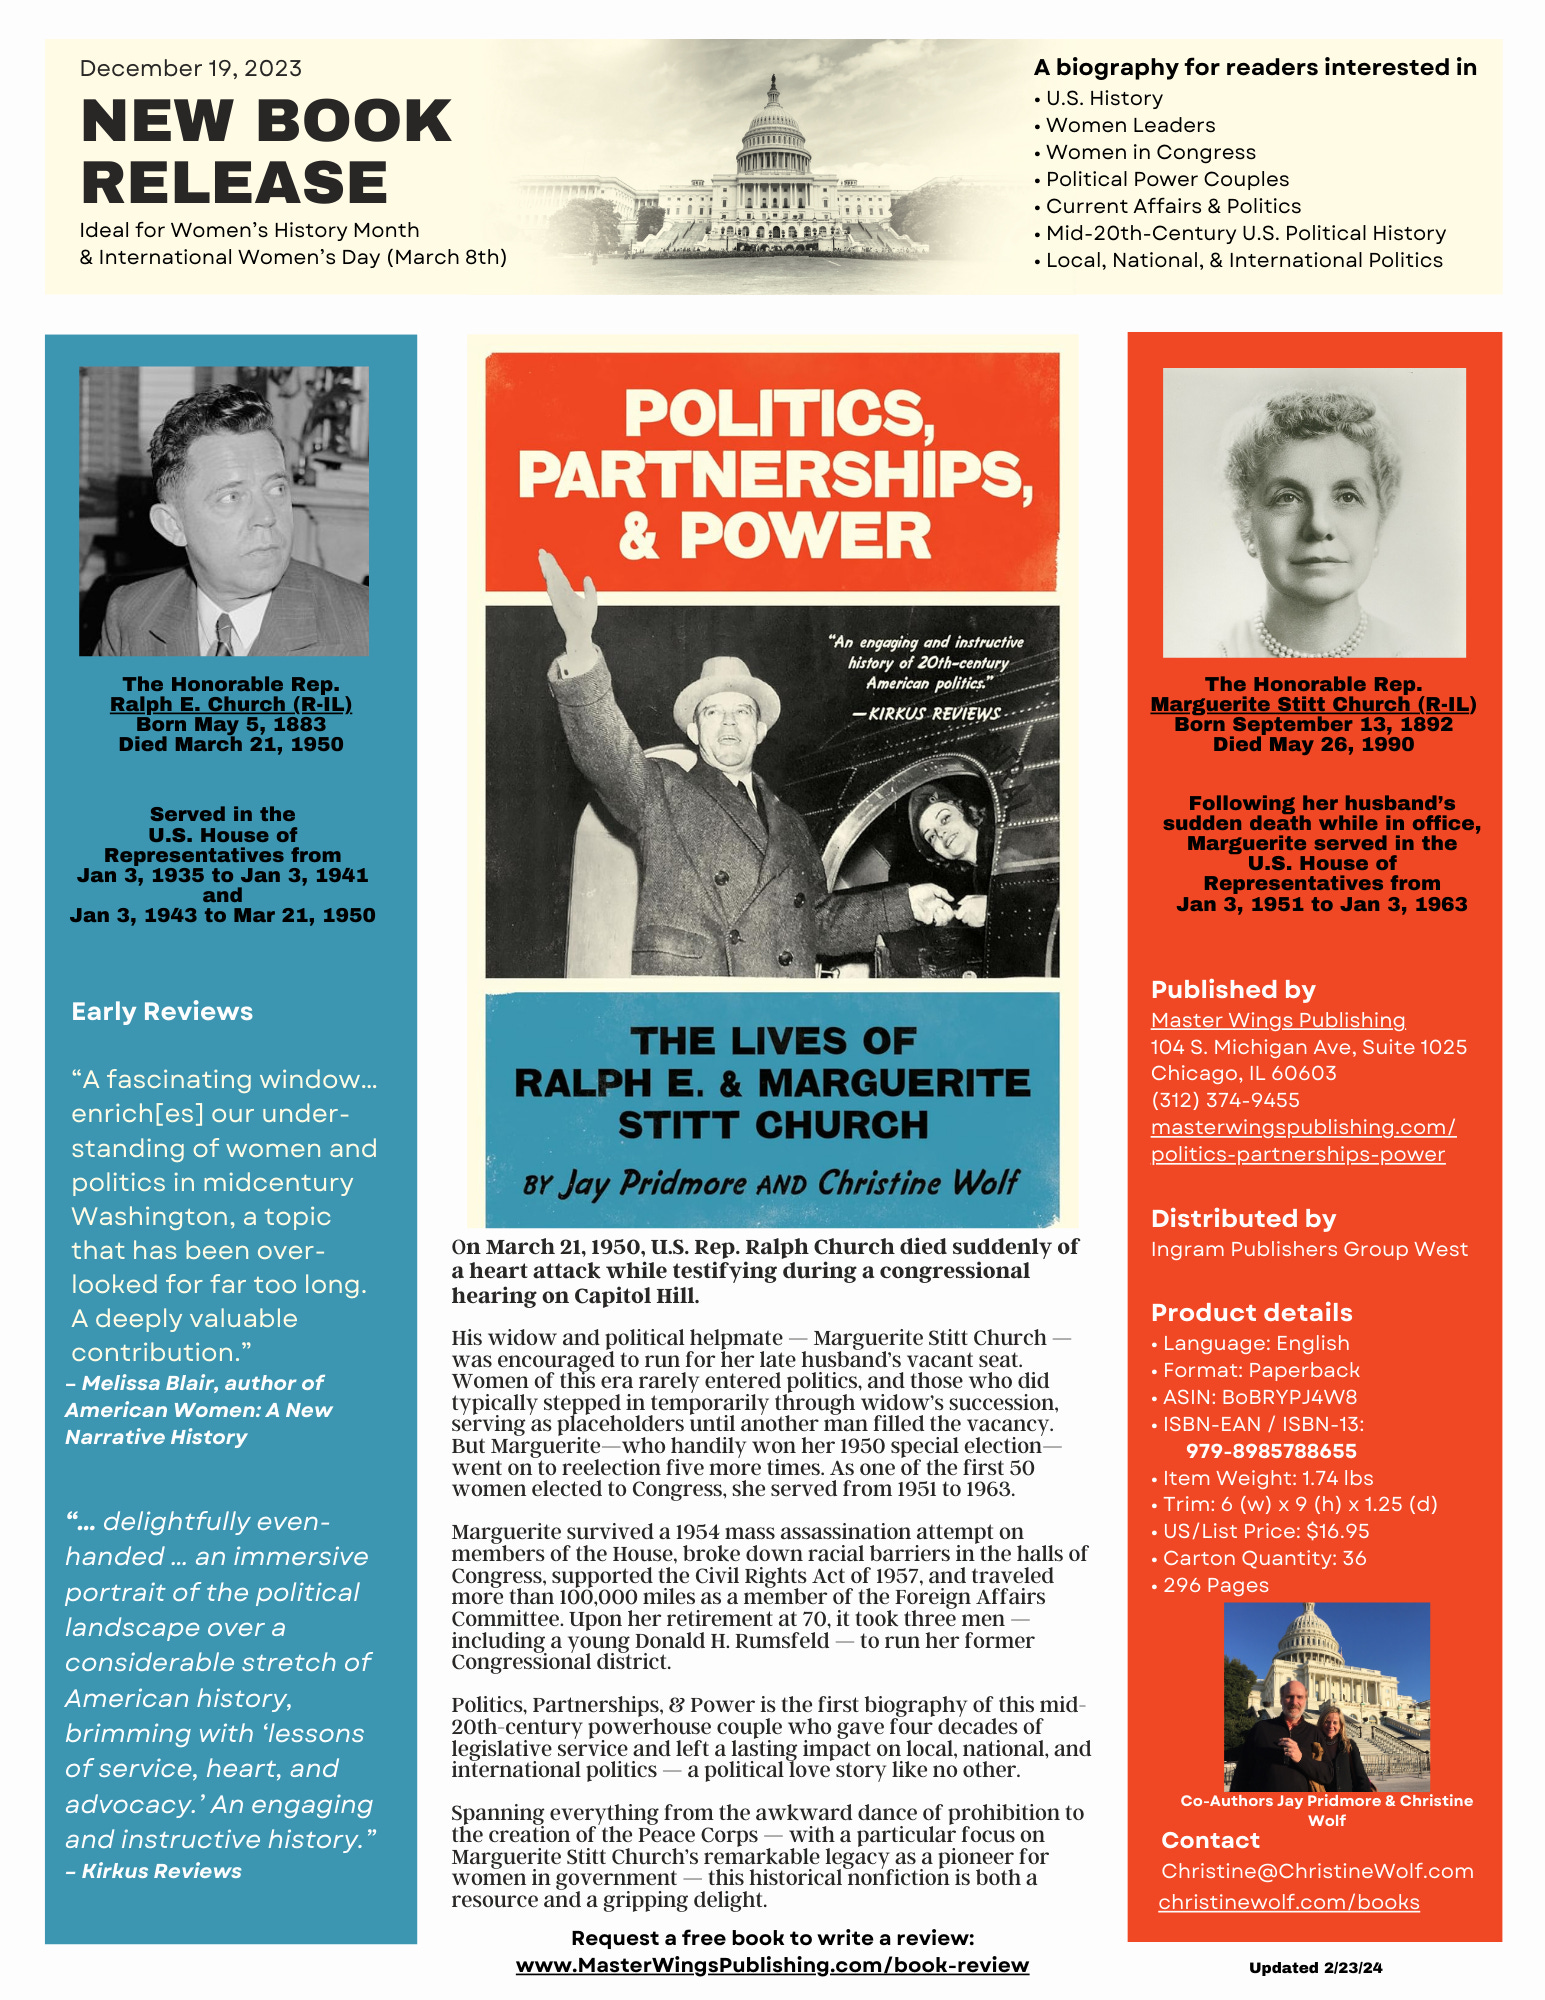 New Book Release announcement includes details about Politics, Partnerships, & Power.